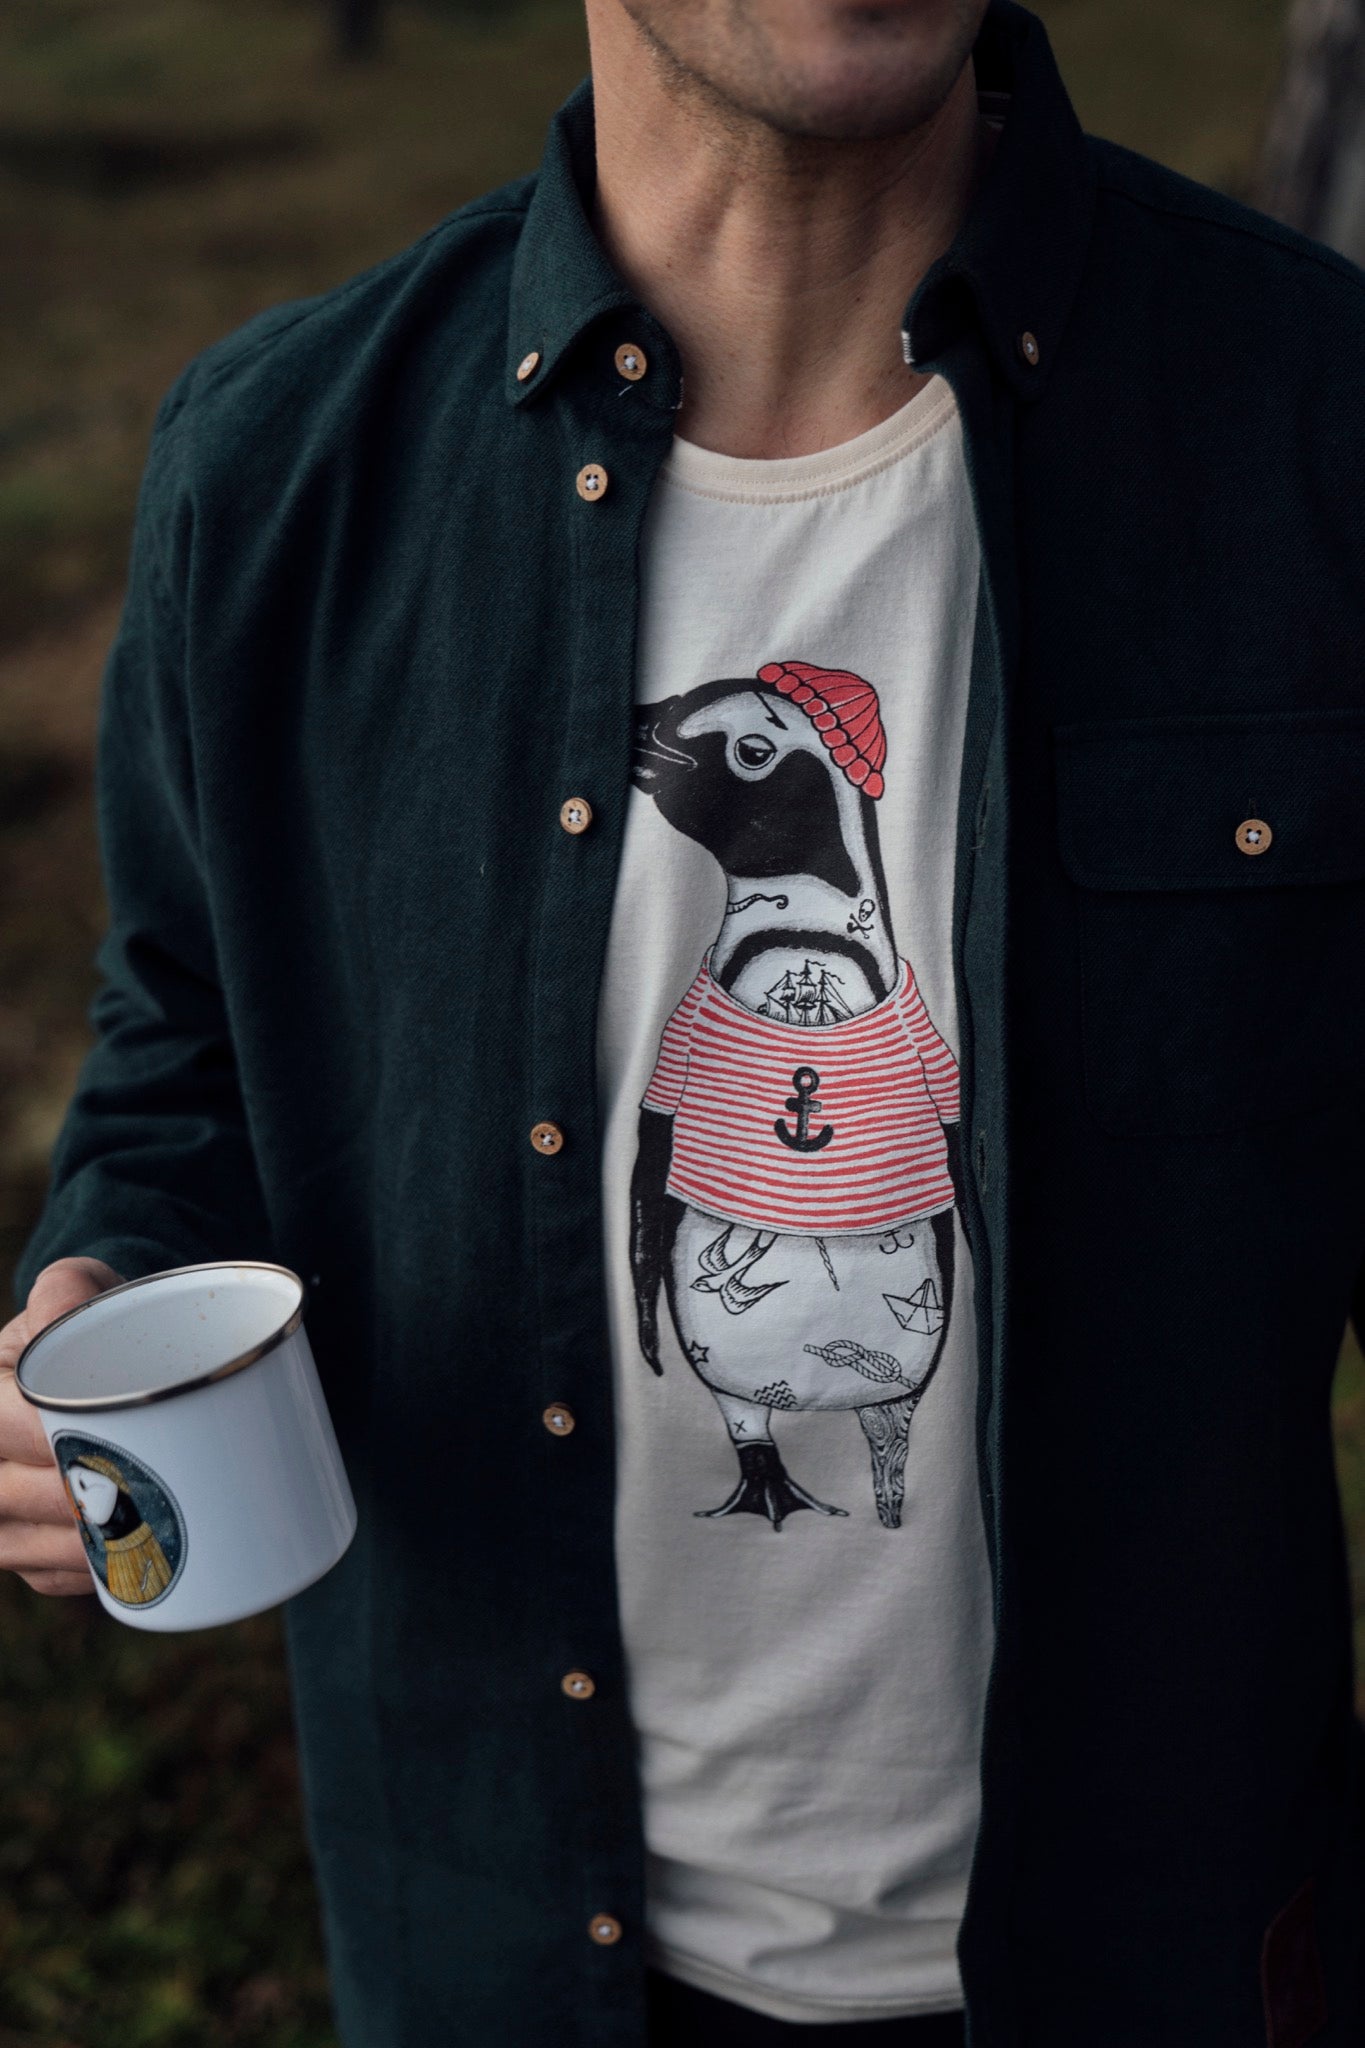 African Penguin T-shirt (Off White)